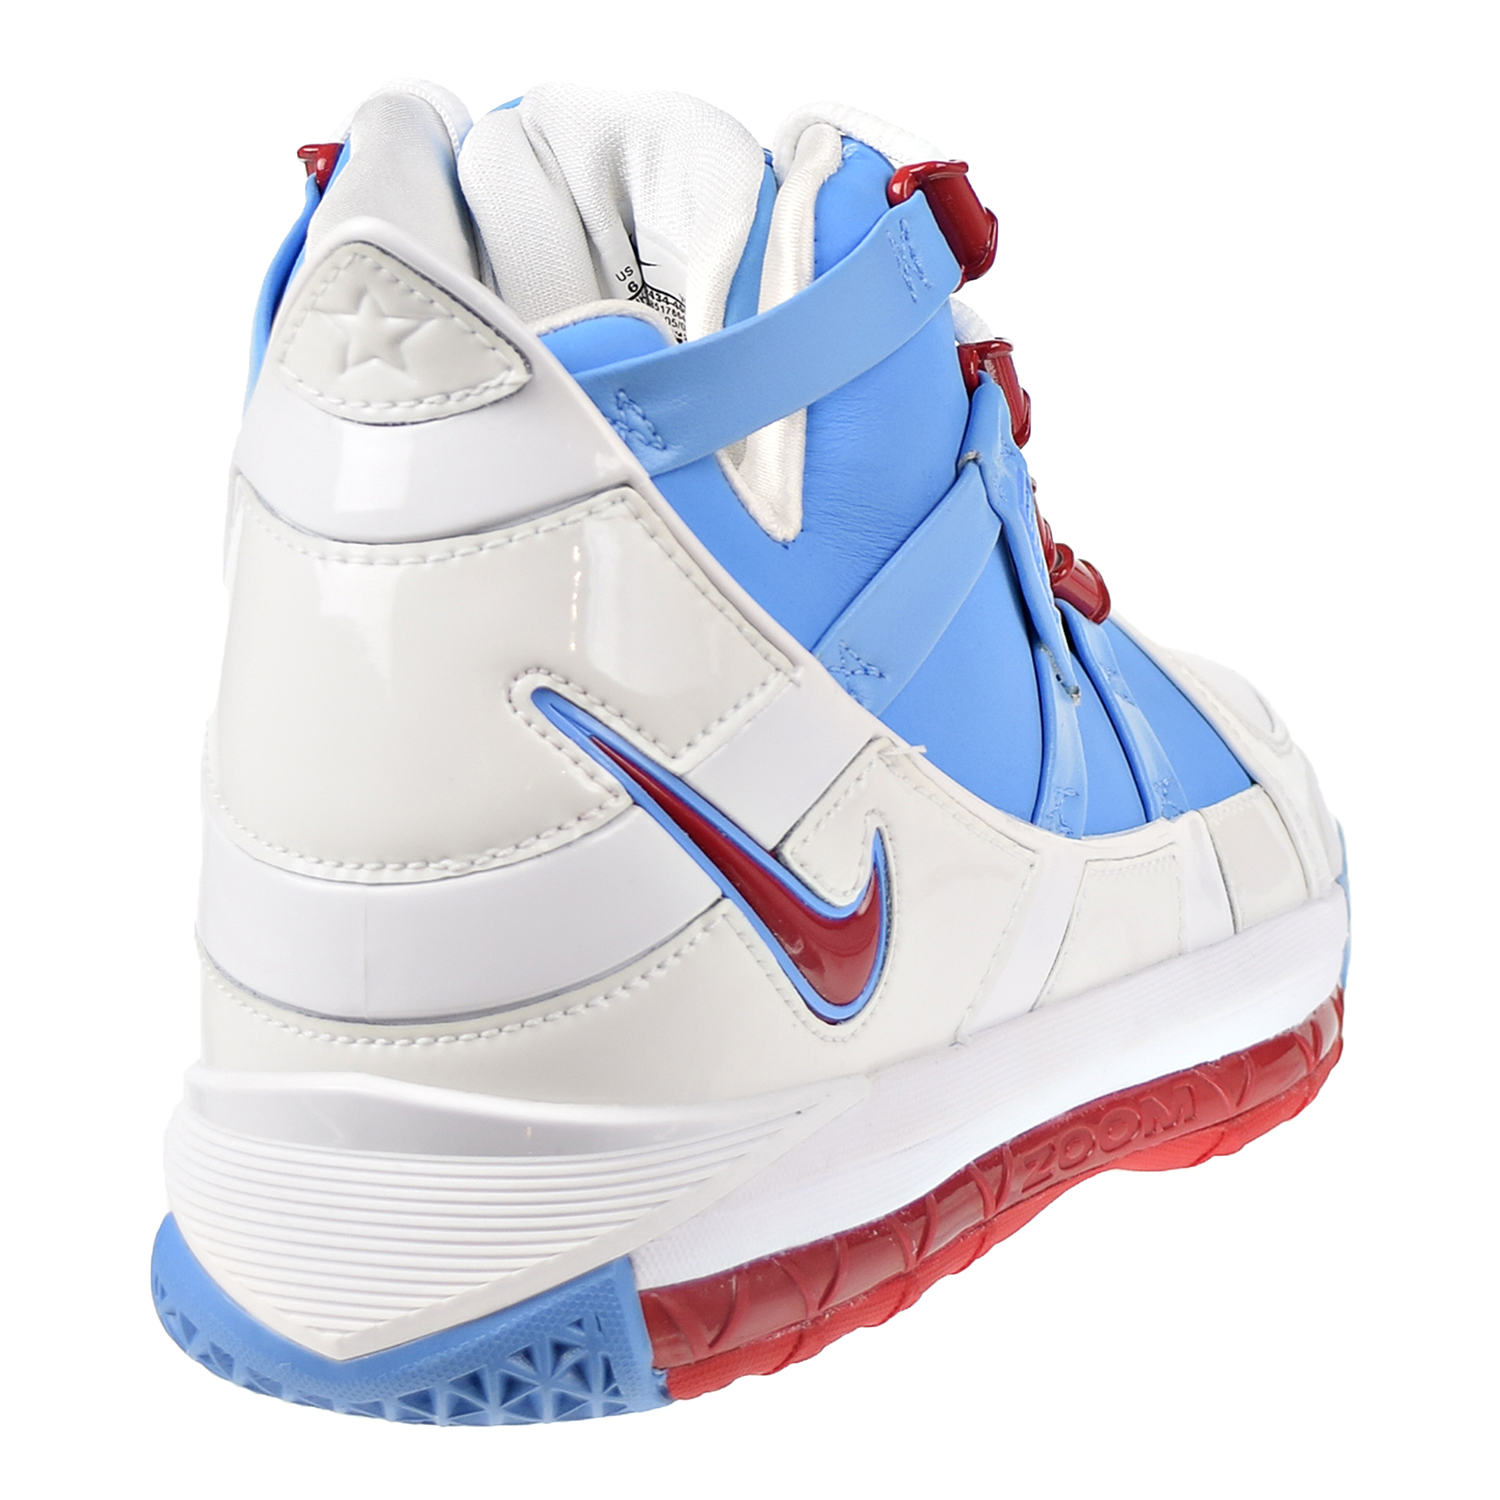 Nike Zoom Lebron III QS "Houston Oilers" Men's Shoes University Blue/Red ao2434-400 - image 3 of 6